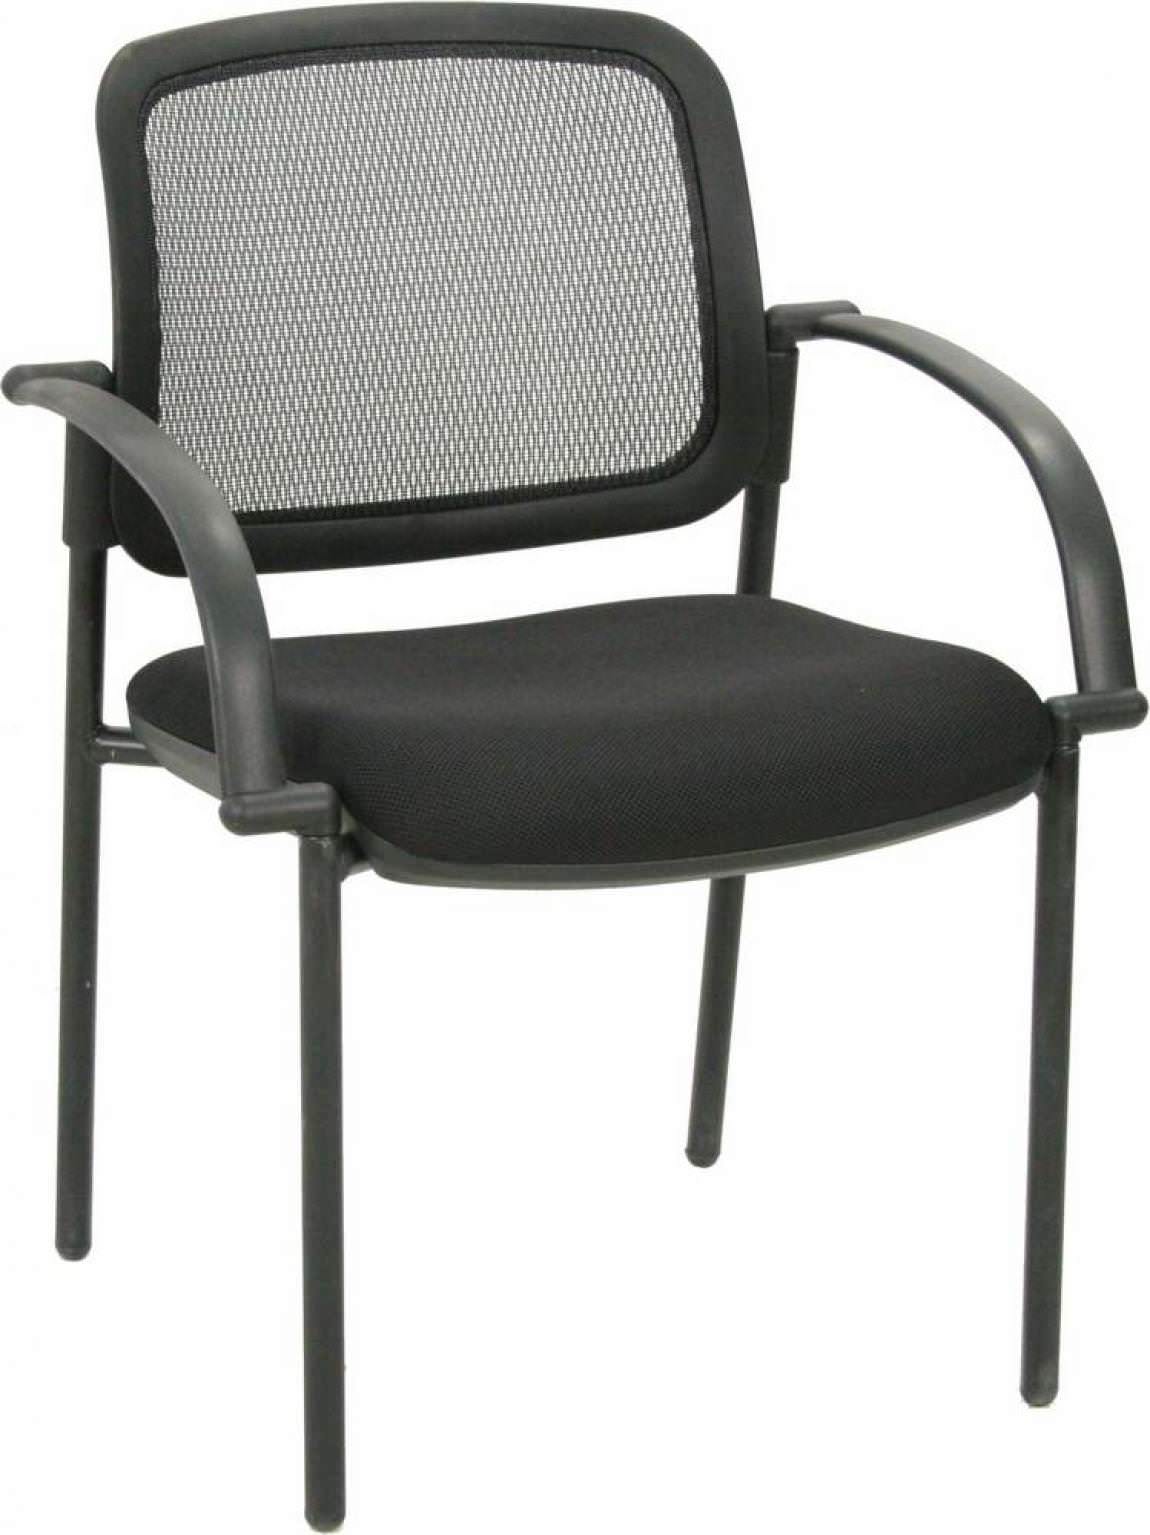 Discount Black Guest Chair